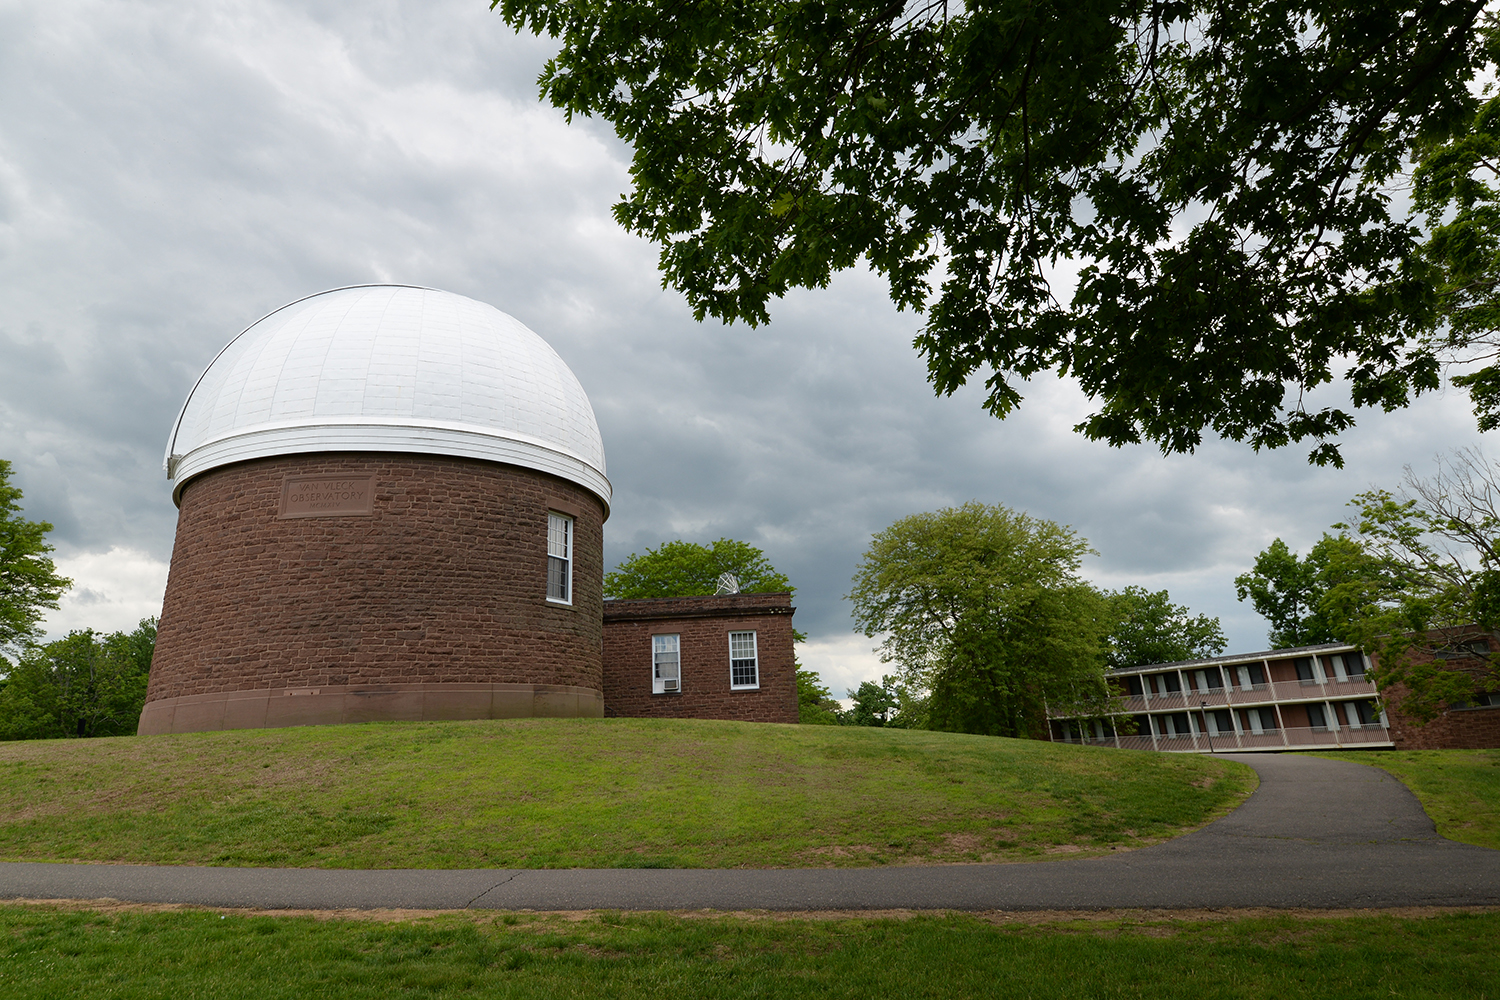 The Van Vleck Observatory on Foss Hill.